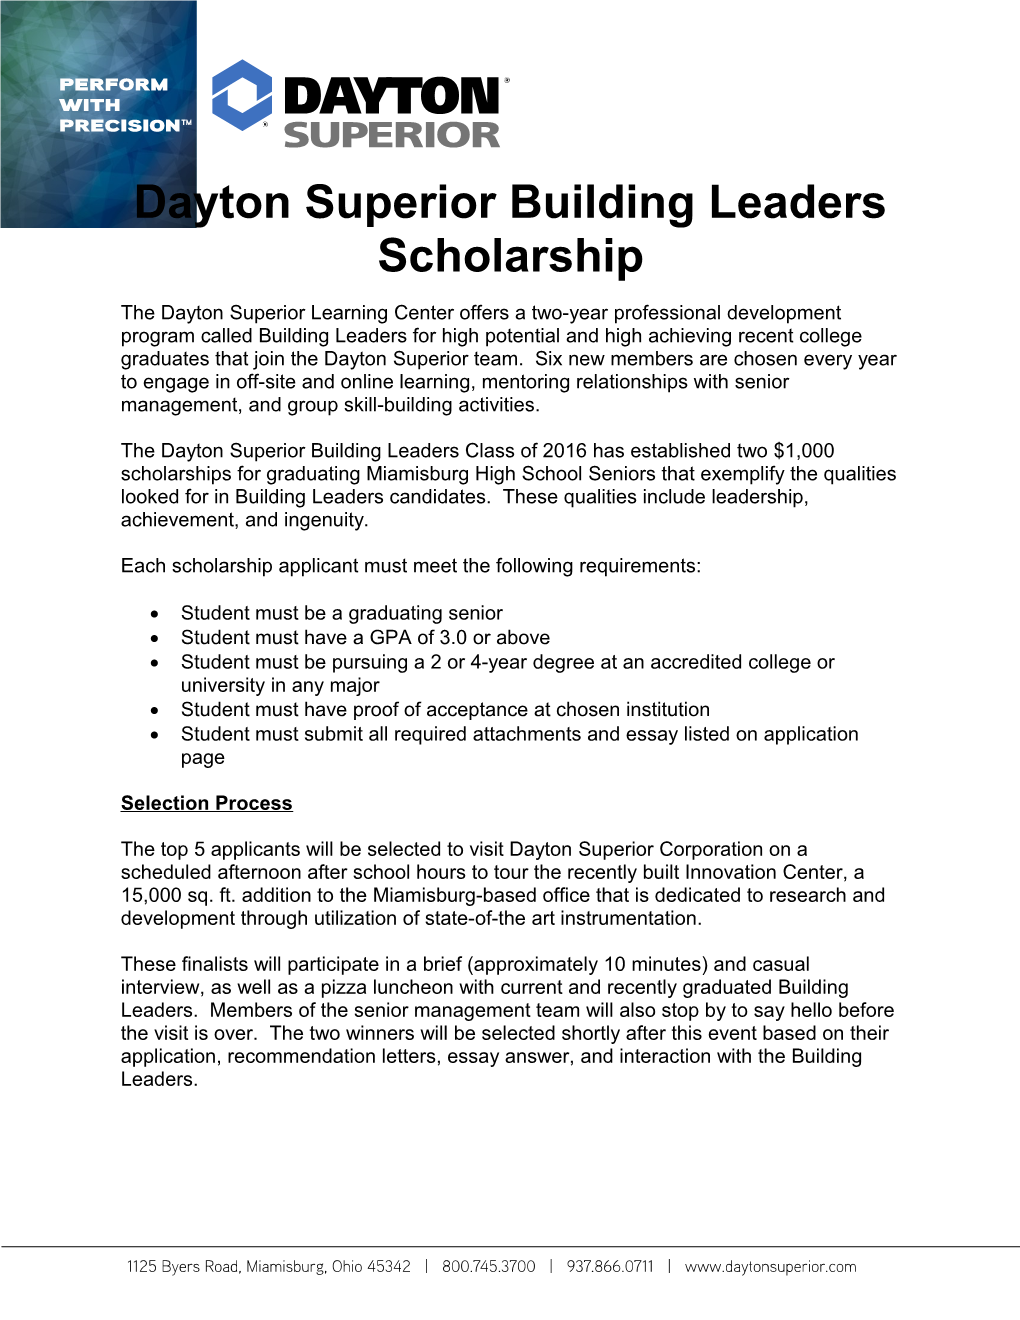 Dayton Superior Building Leaders Scholarship